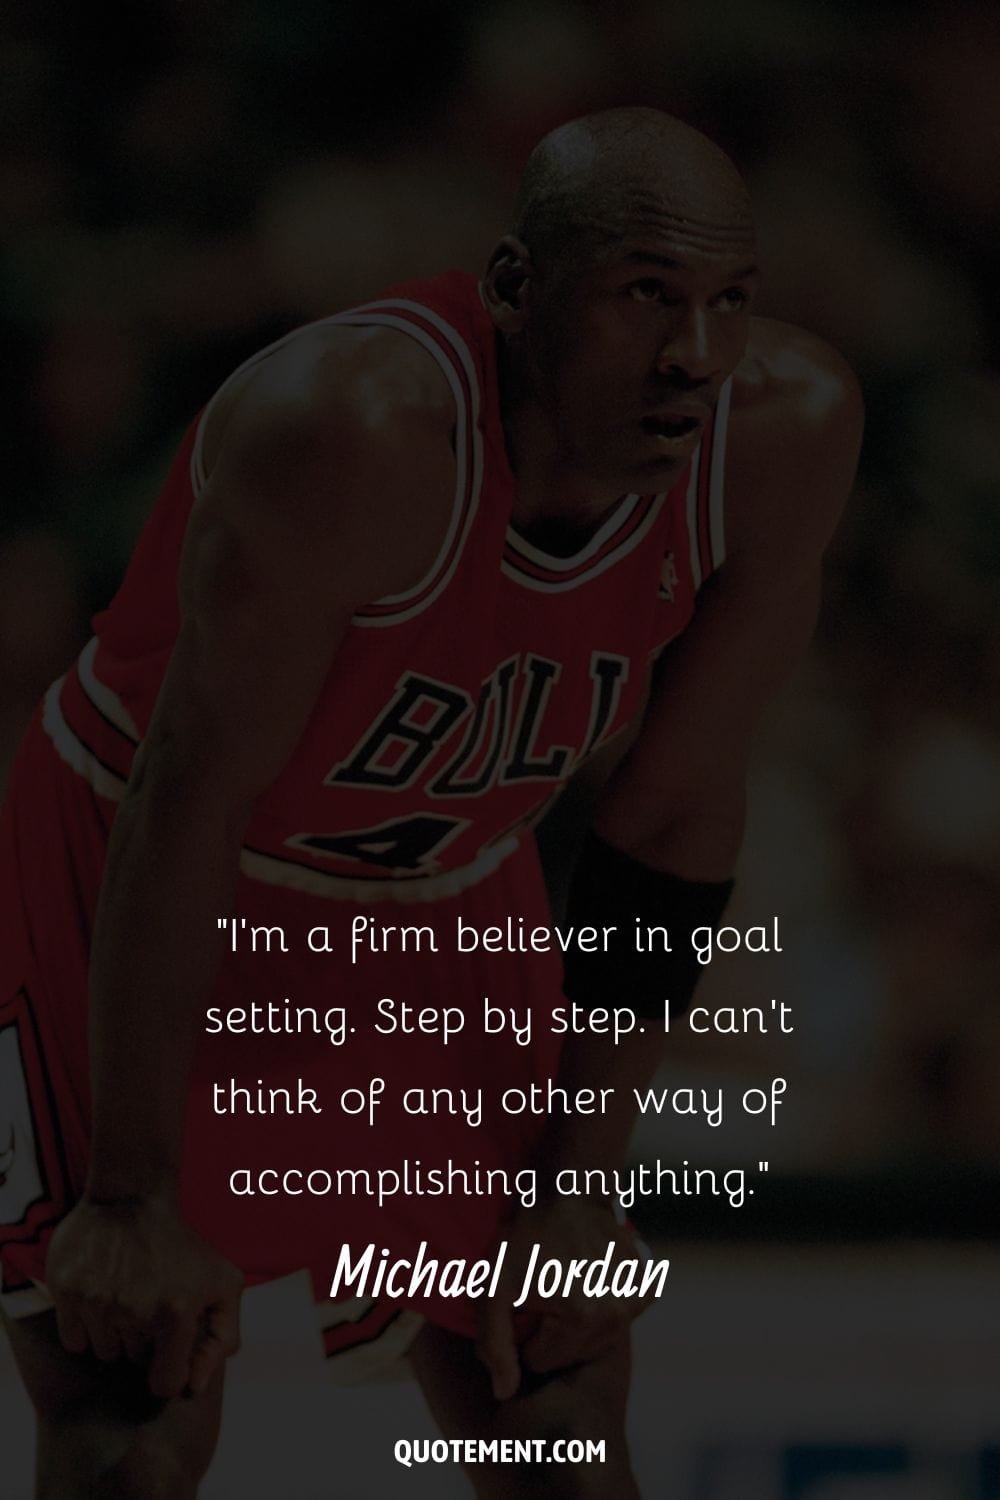 Michael Jordan on court leaning forward representing an inspiring MJ quote